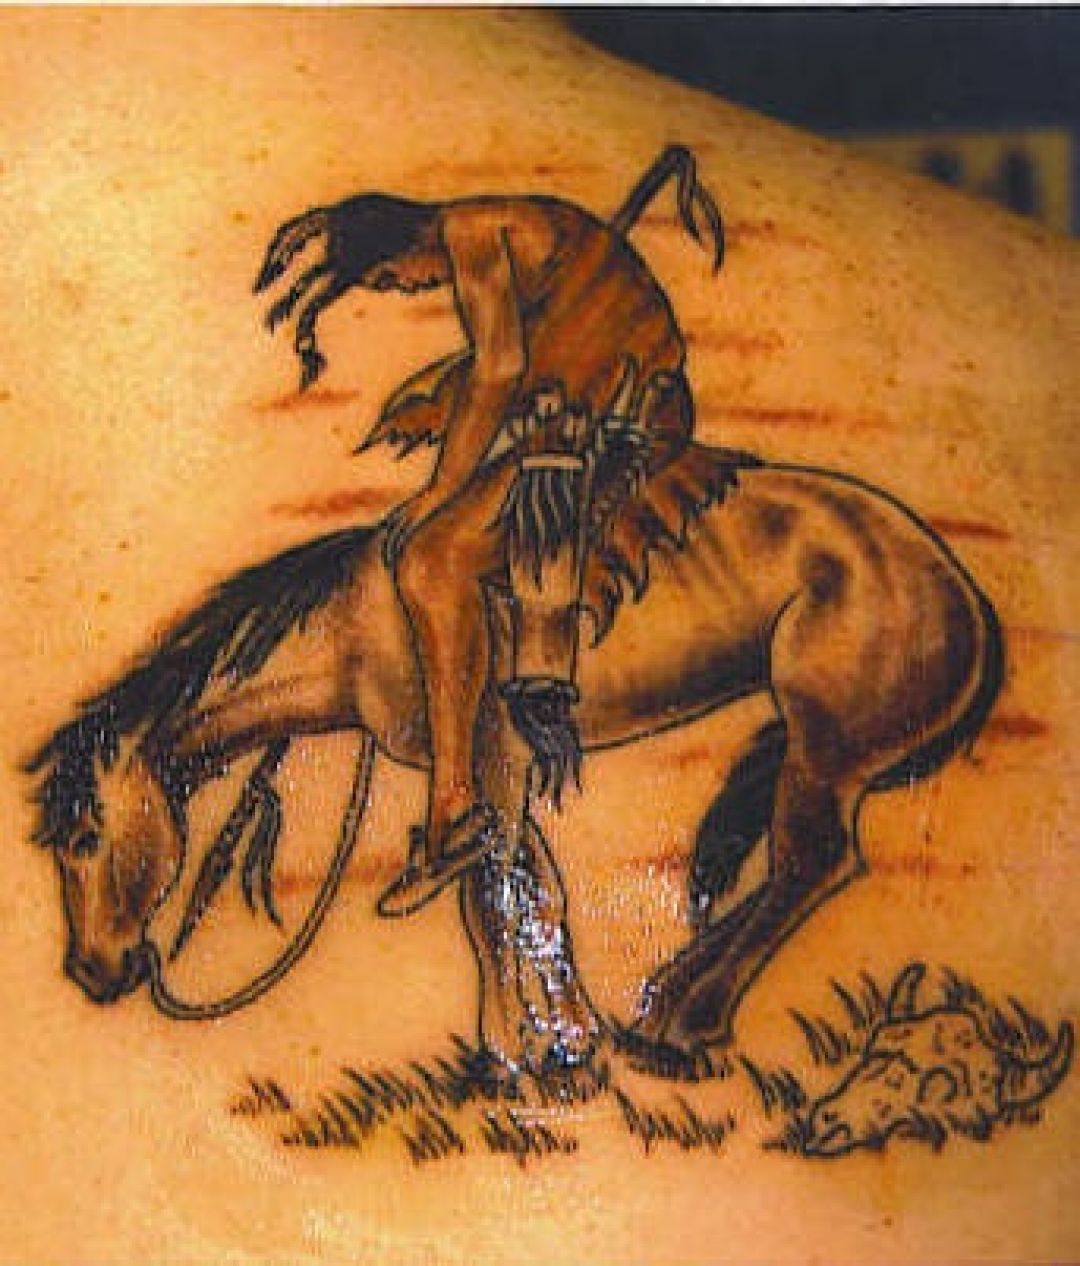 INDIAN WAR HORSE Temporary Tattoo  Adult Body Art Large A5 Horses  Tattoos   eBay